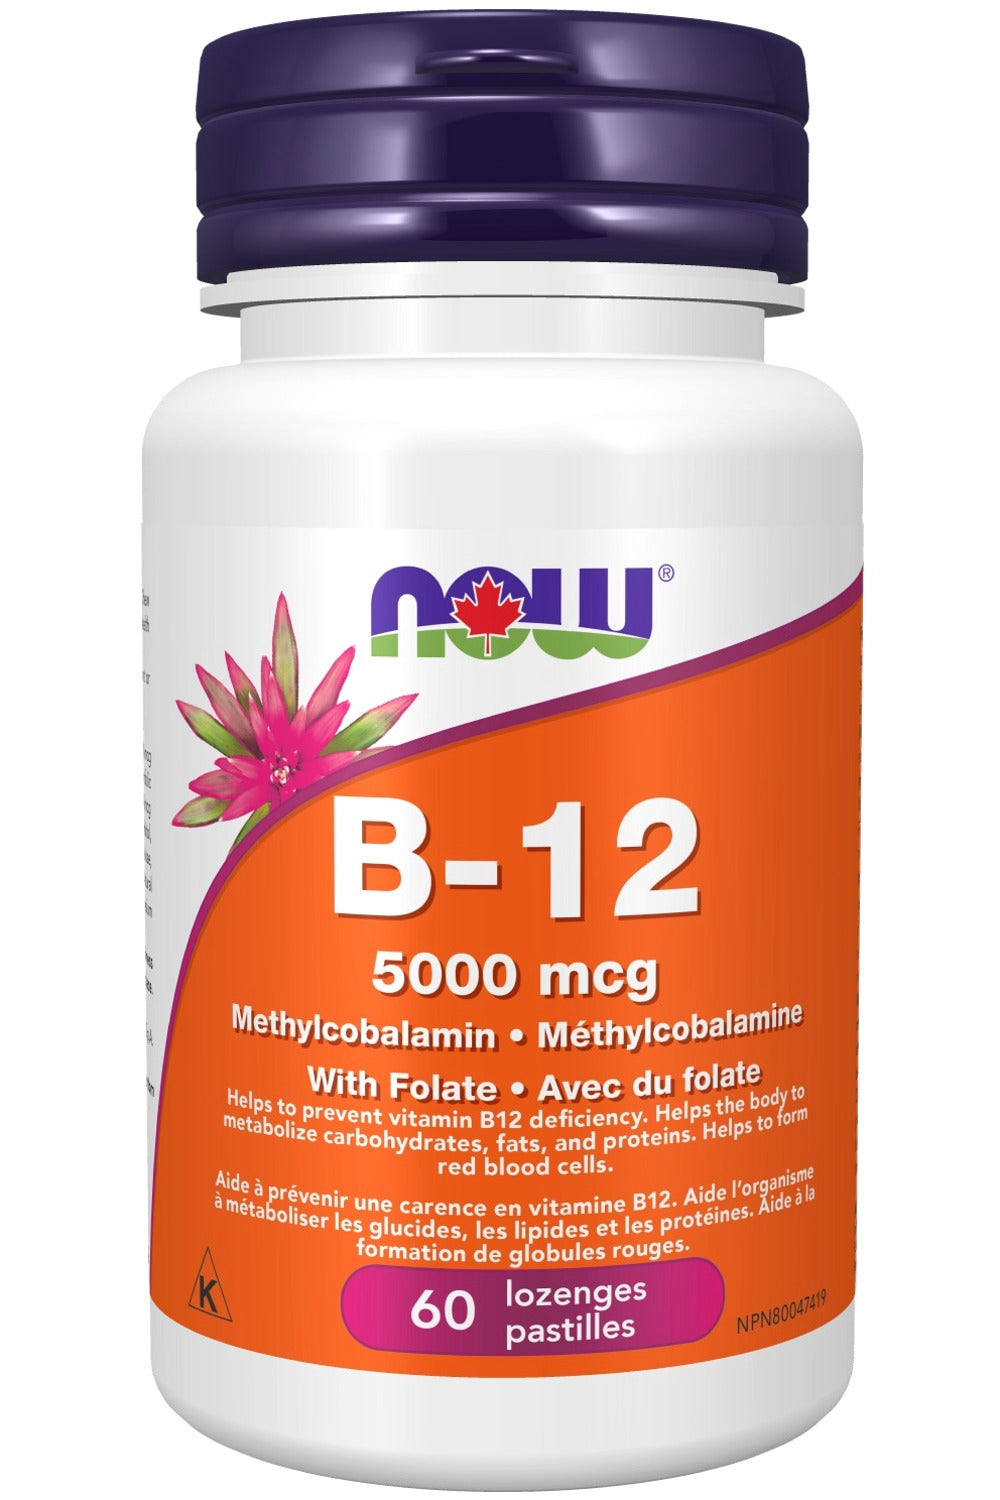 NOW B-12 (Methyl form 5000 mcg 60 lozenges)